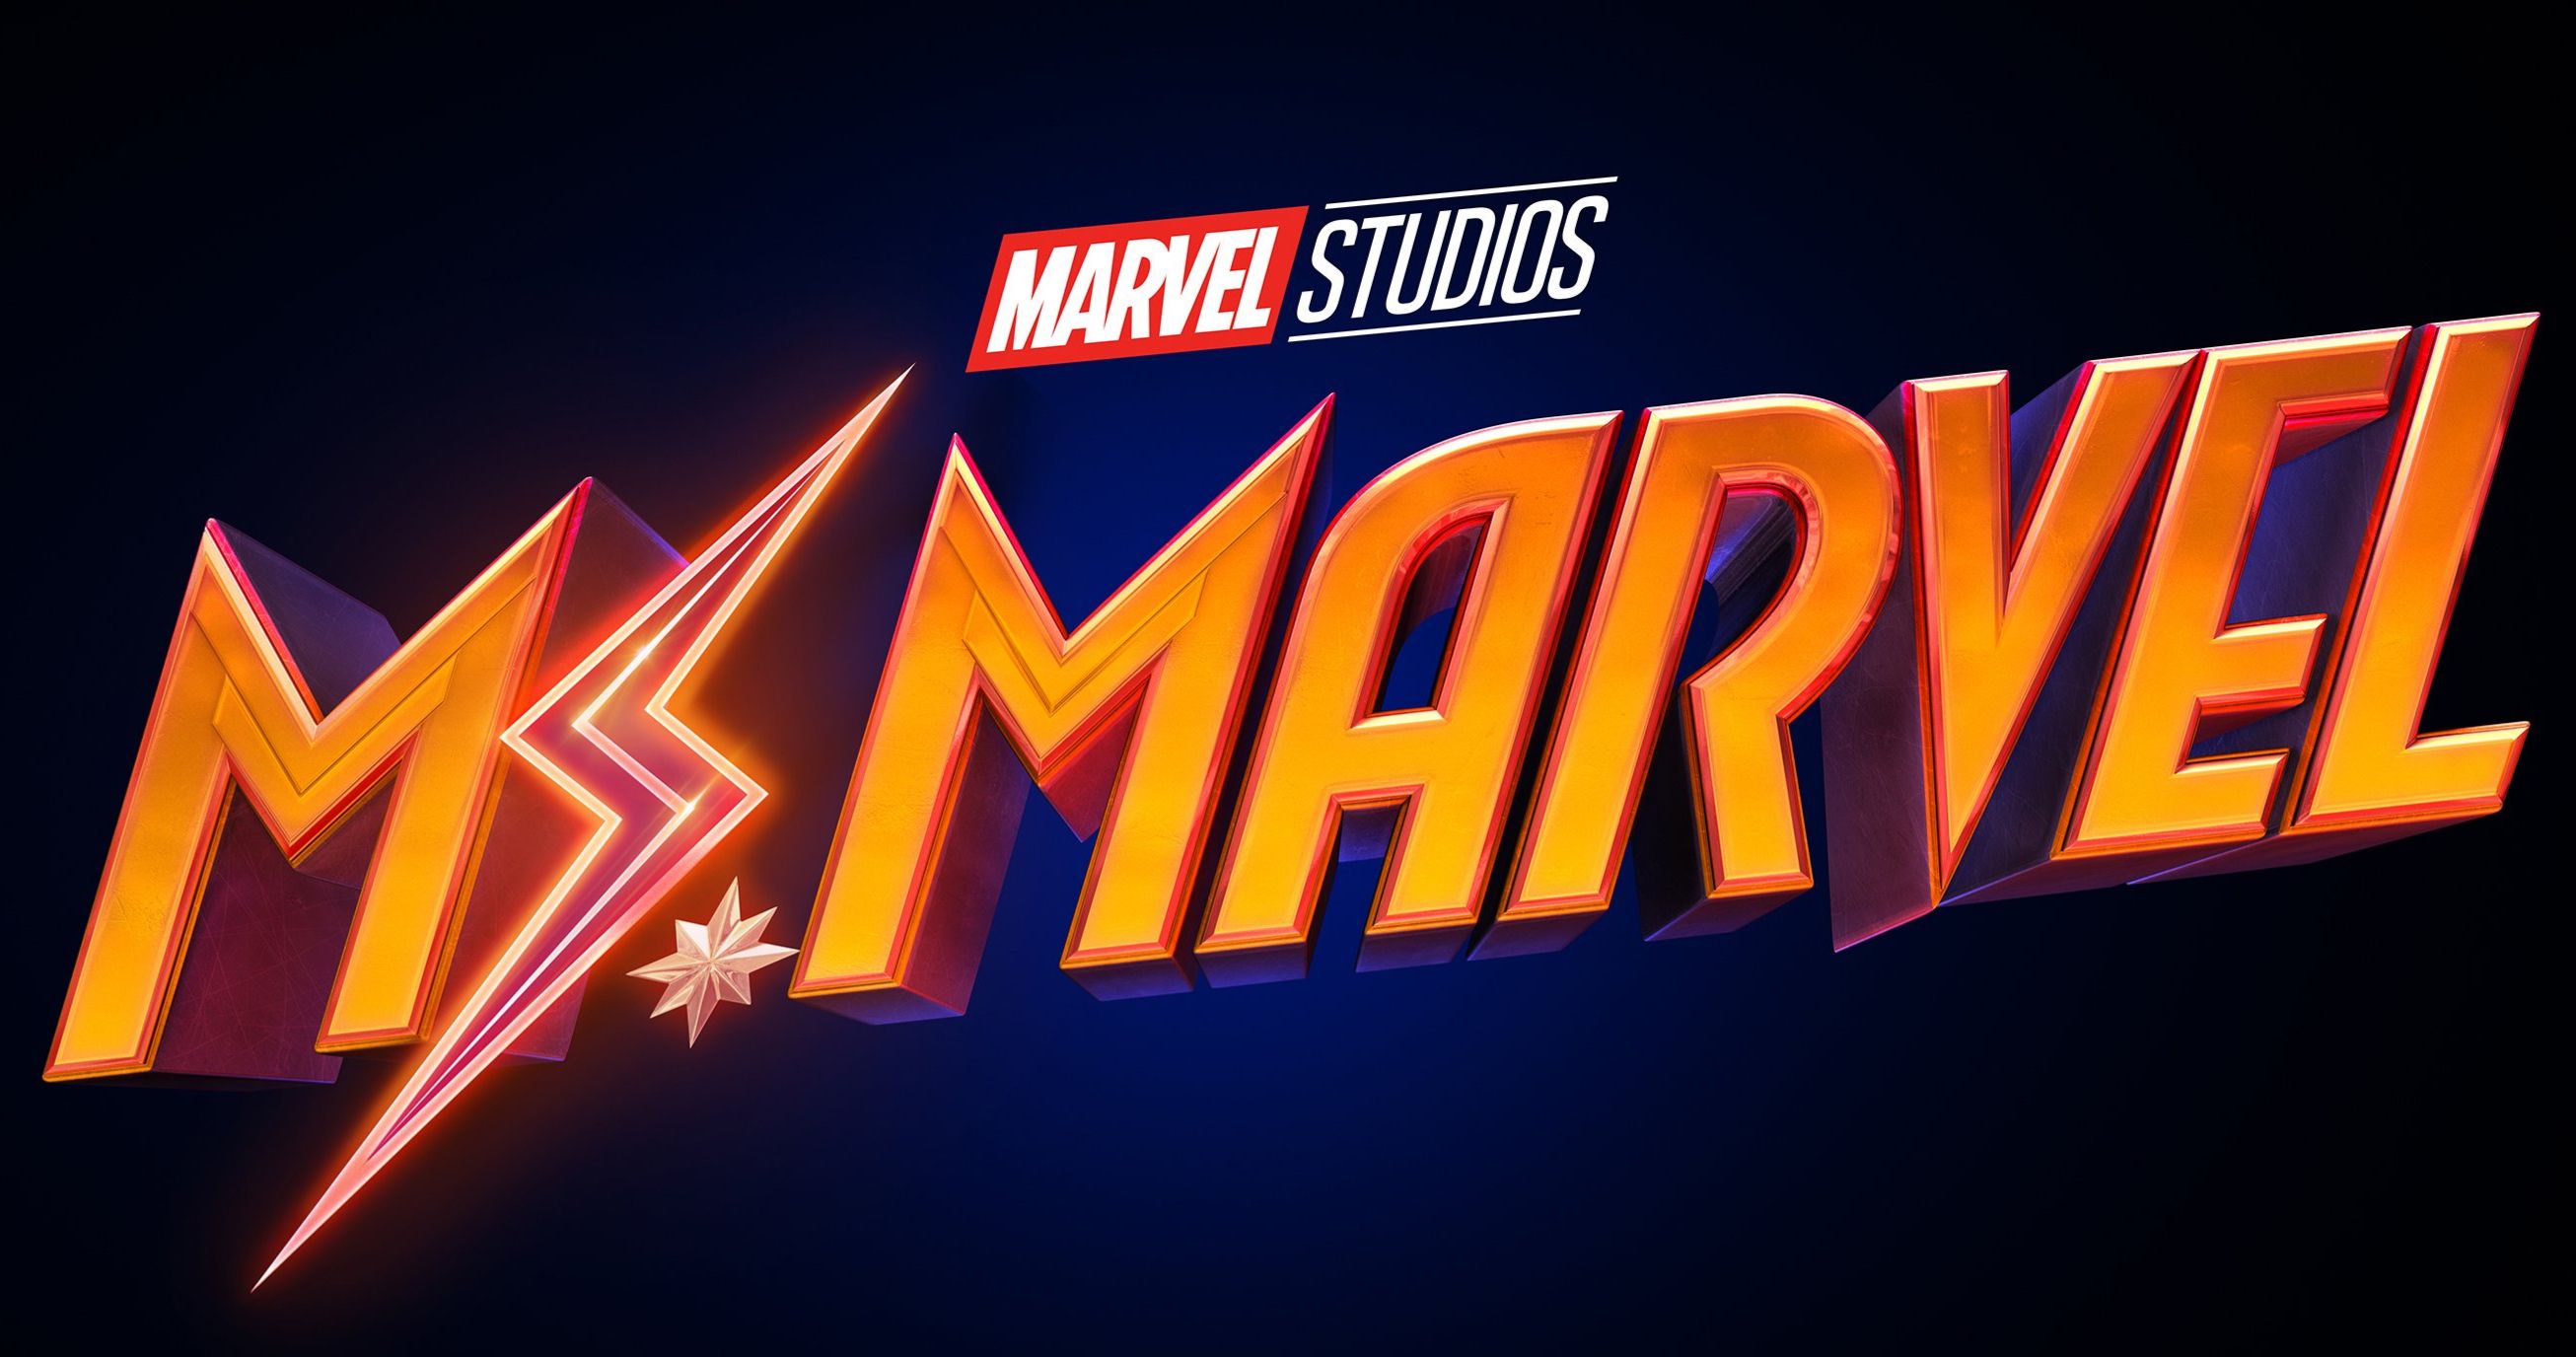 Ms. Marvel Disney+ Series Brings in Several Directors Including Bad Boys 3 Duo